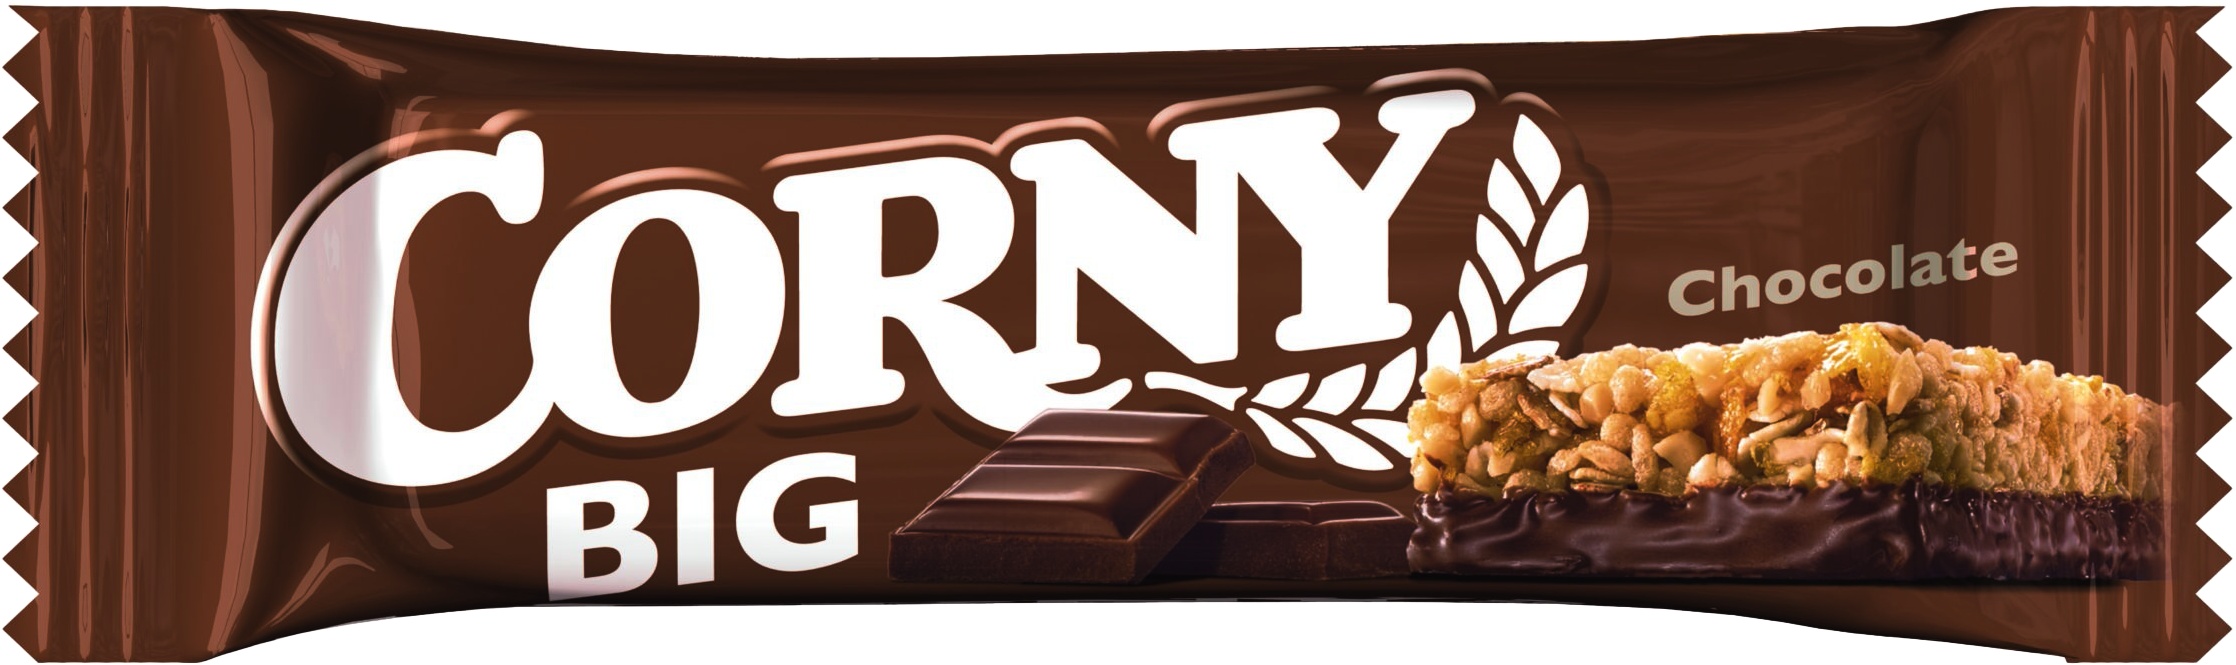 Slika za Mini bar čokolada Corny extra big  50g